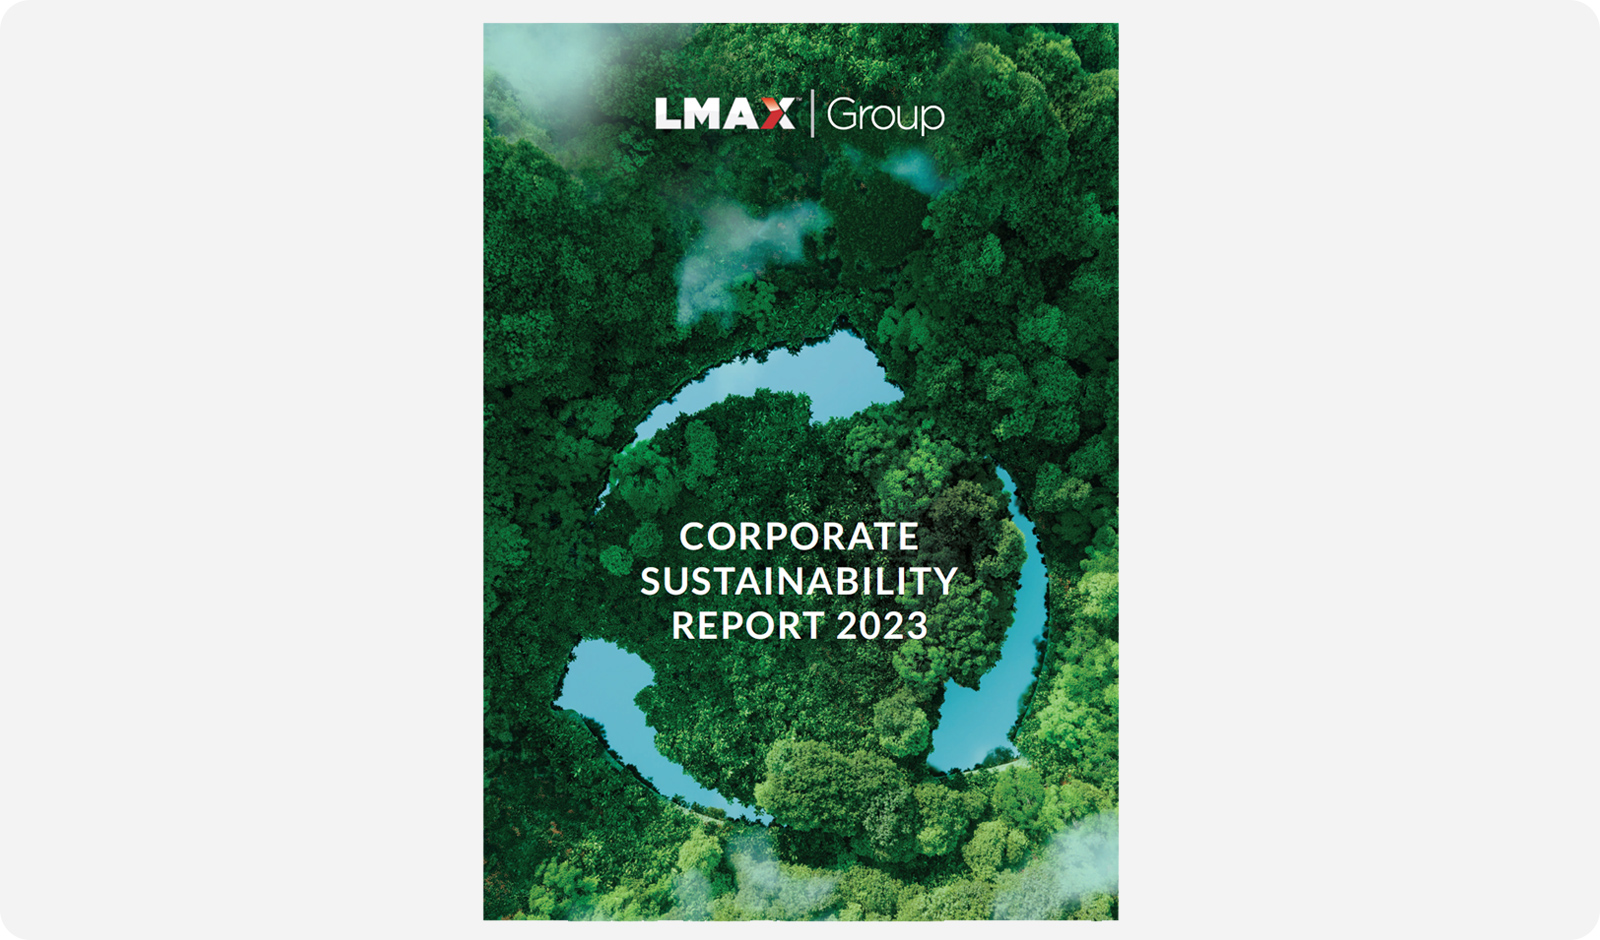 Corporate sustainability report